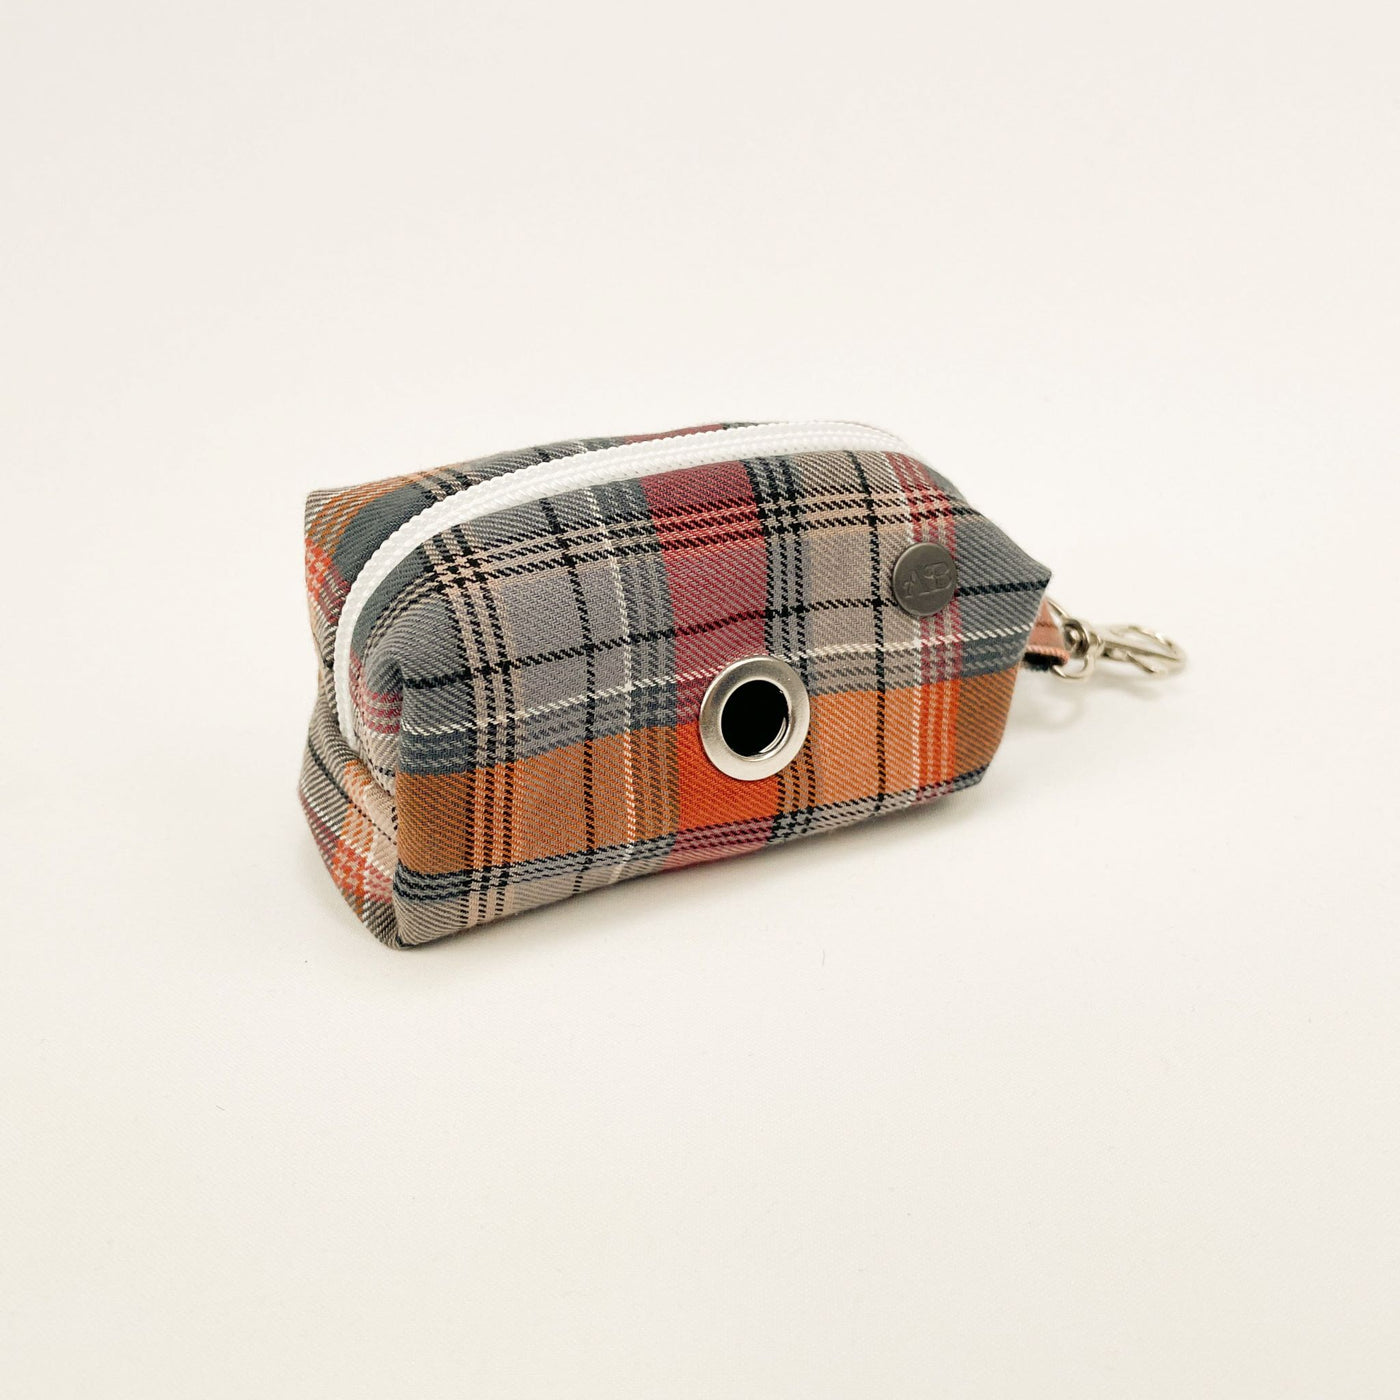 Dog poo bag holder, part of  the Grey and Orange Autumn Check Set.